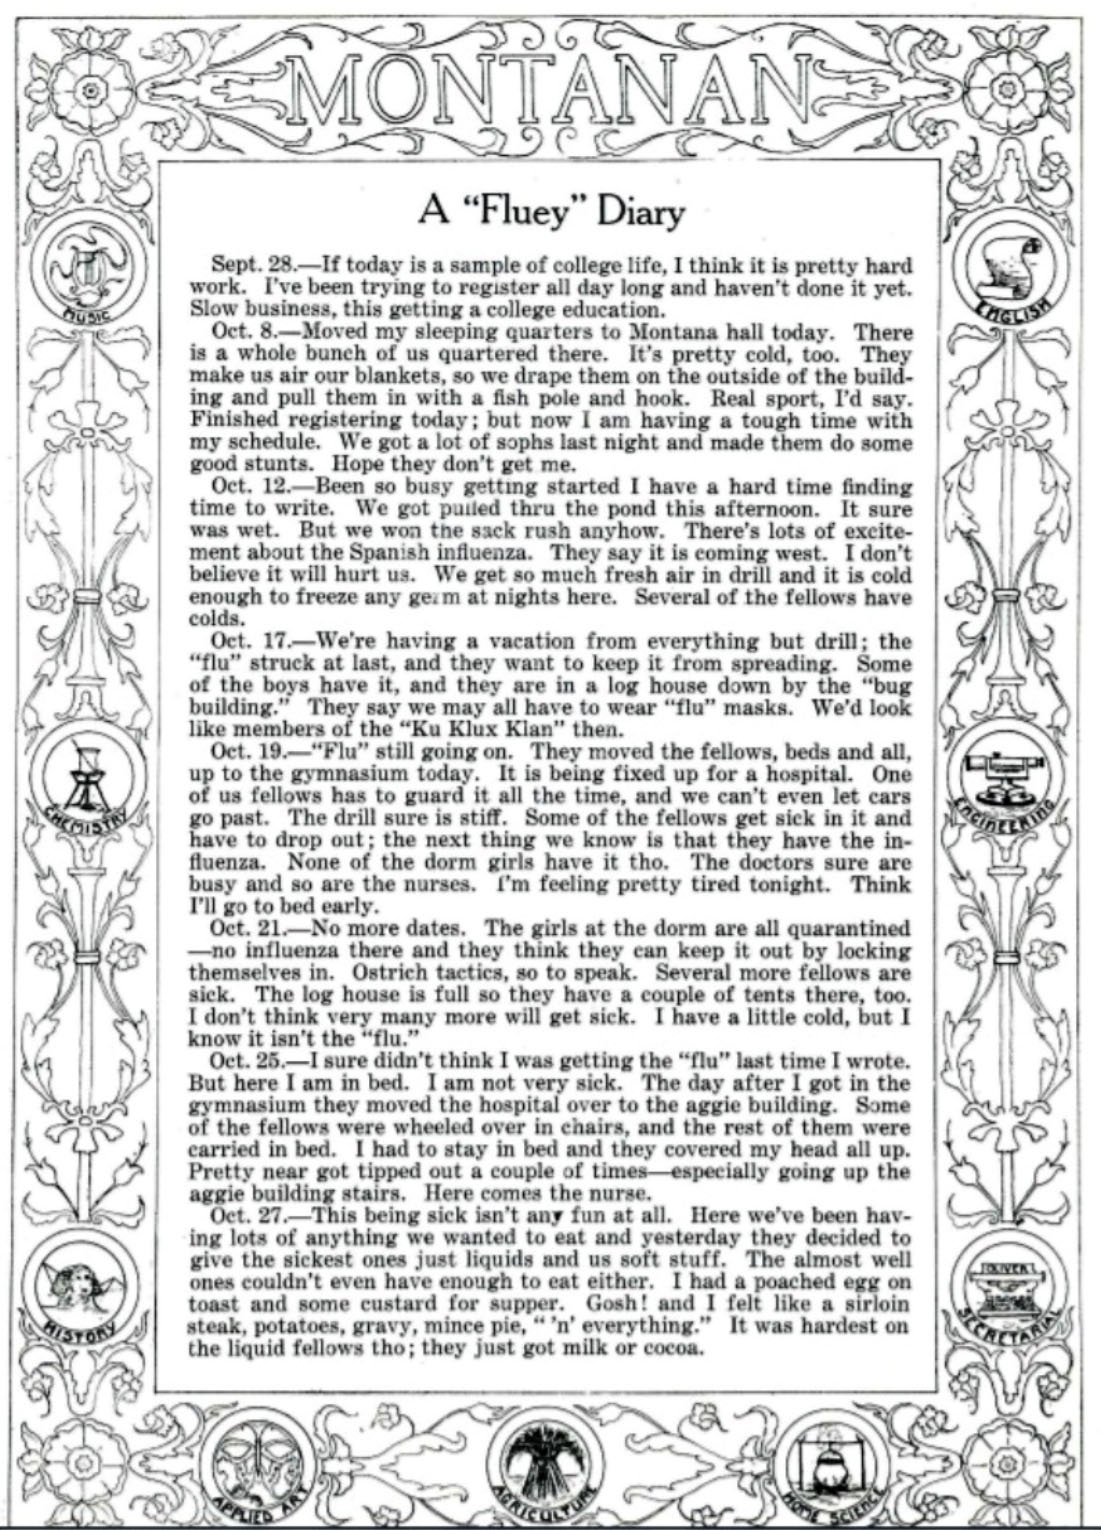 “A Fluey Diary“, The Montanan, 1920, vol. 13.